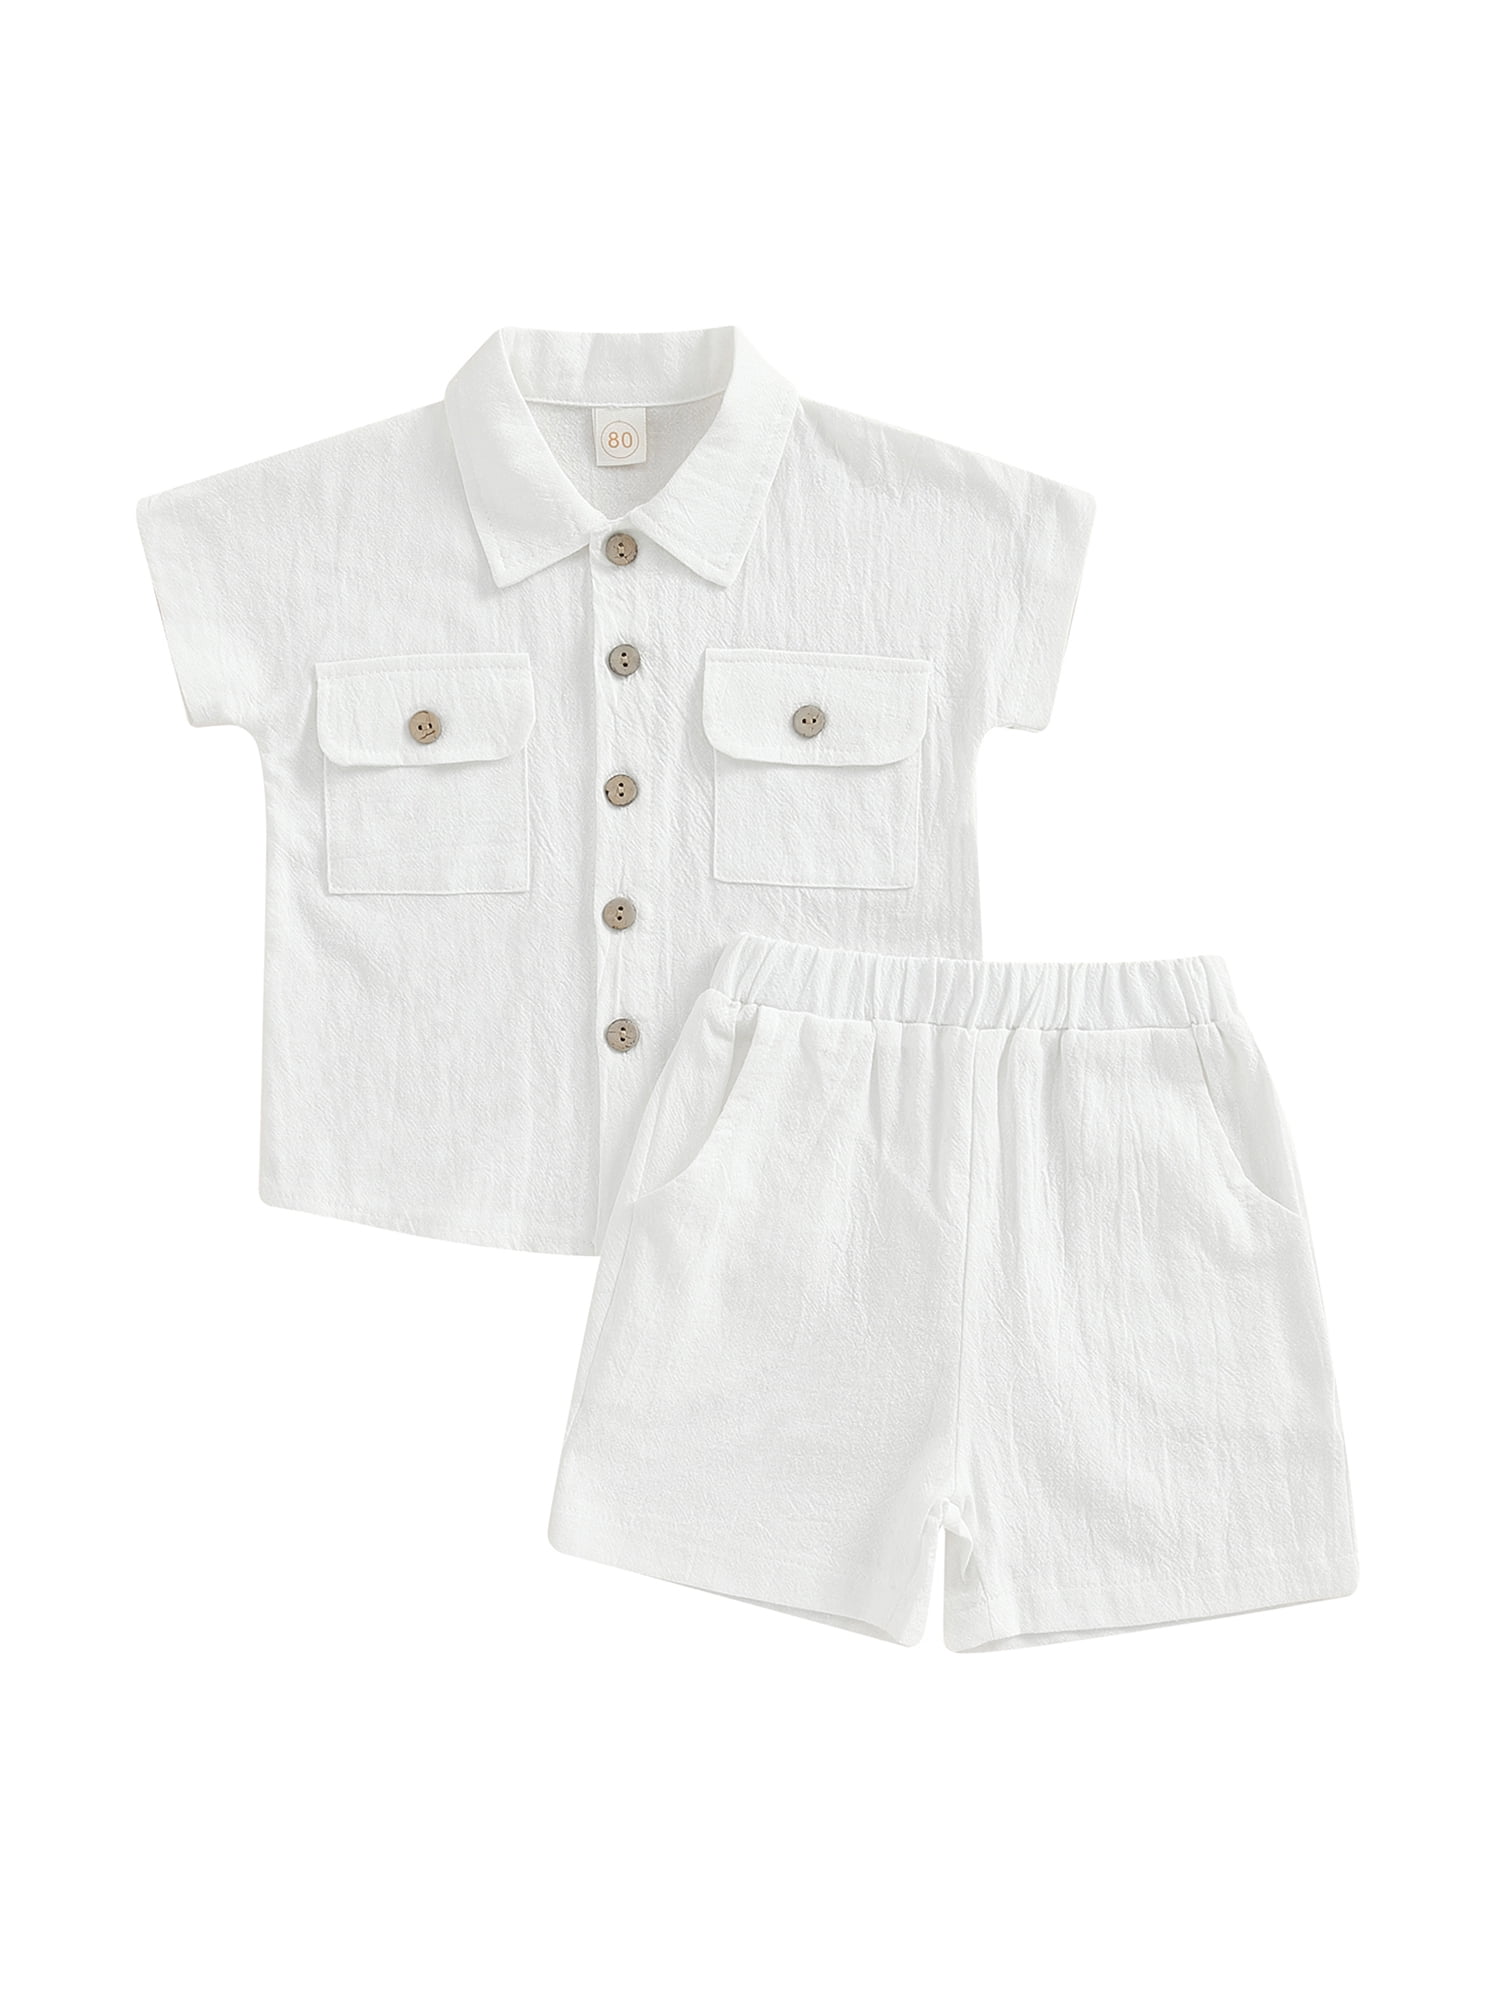 Karuedoo Toddler Baby Boys Summer Clothes Cotton Linen Turn-Down Collar ...